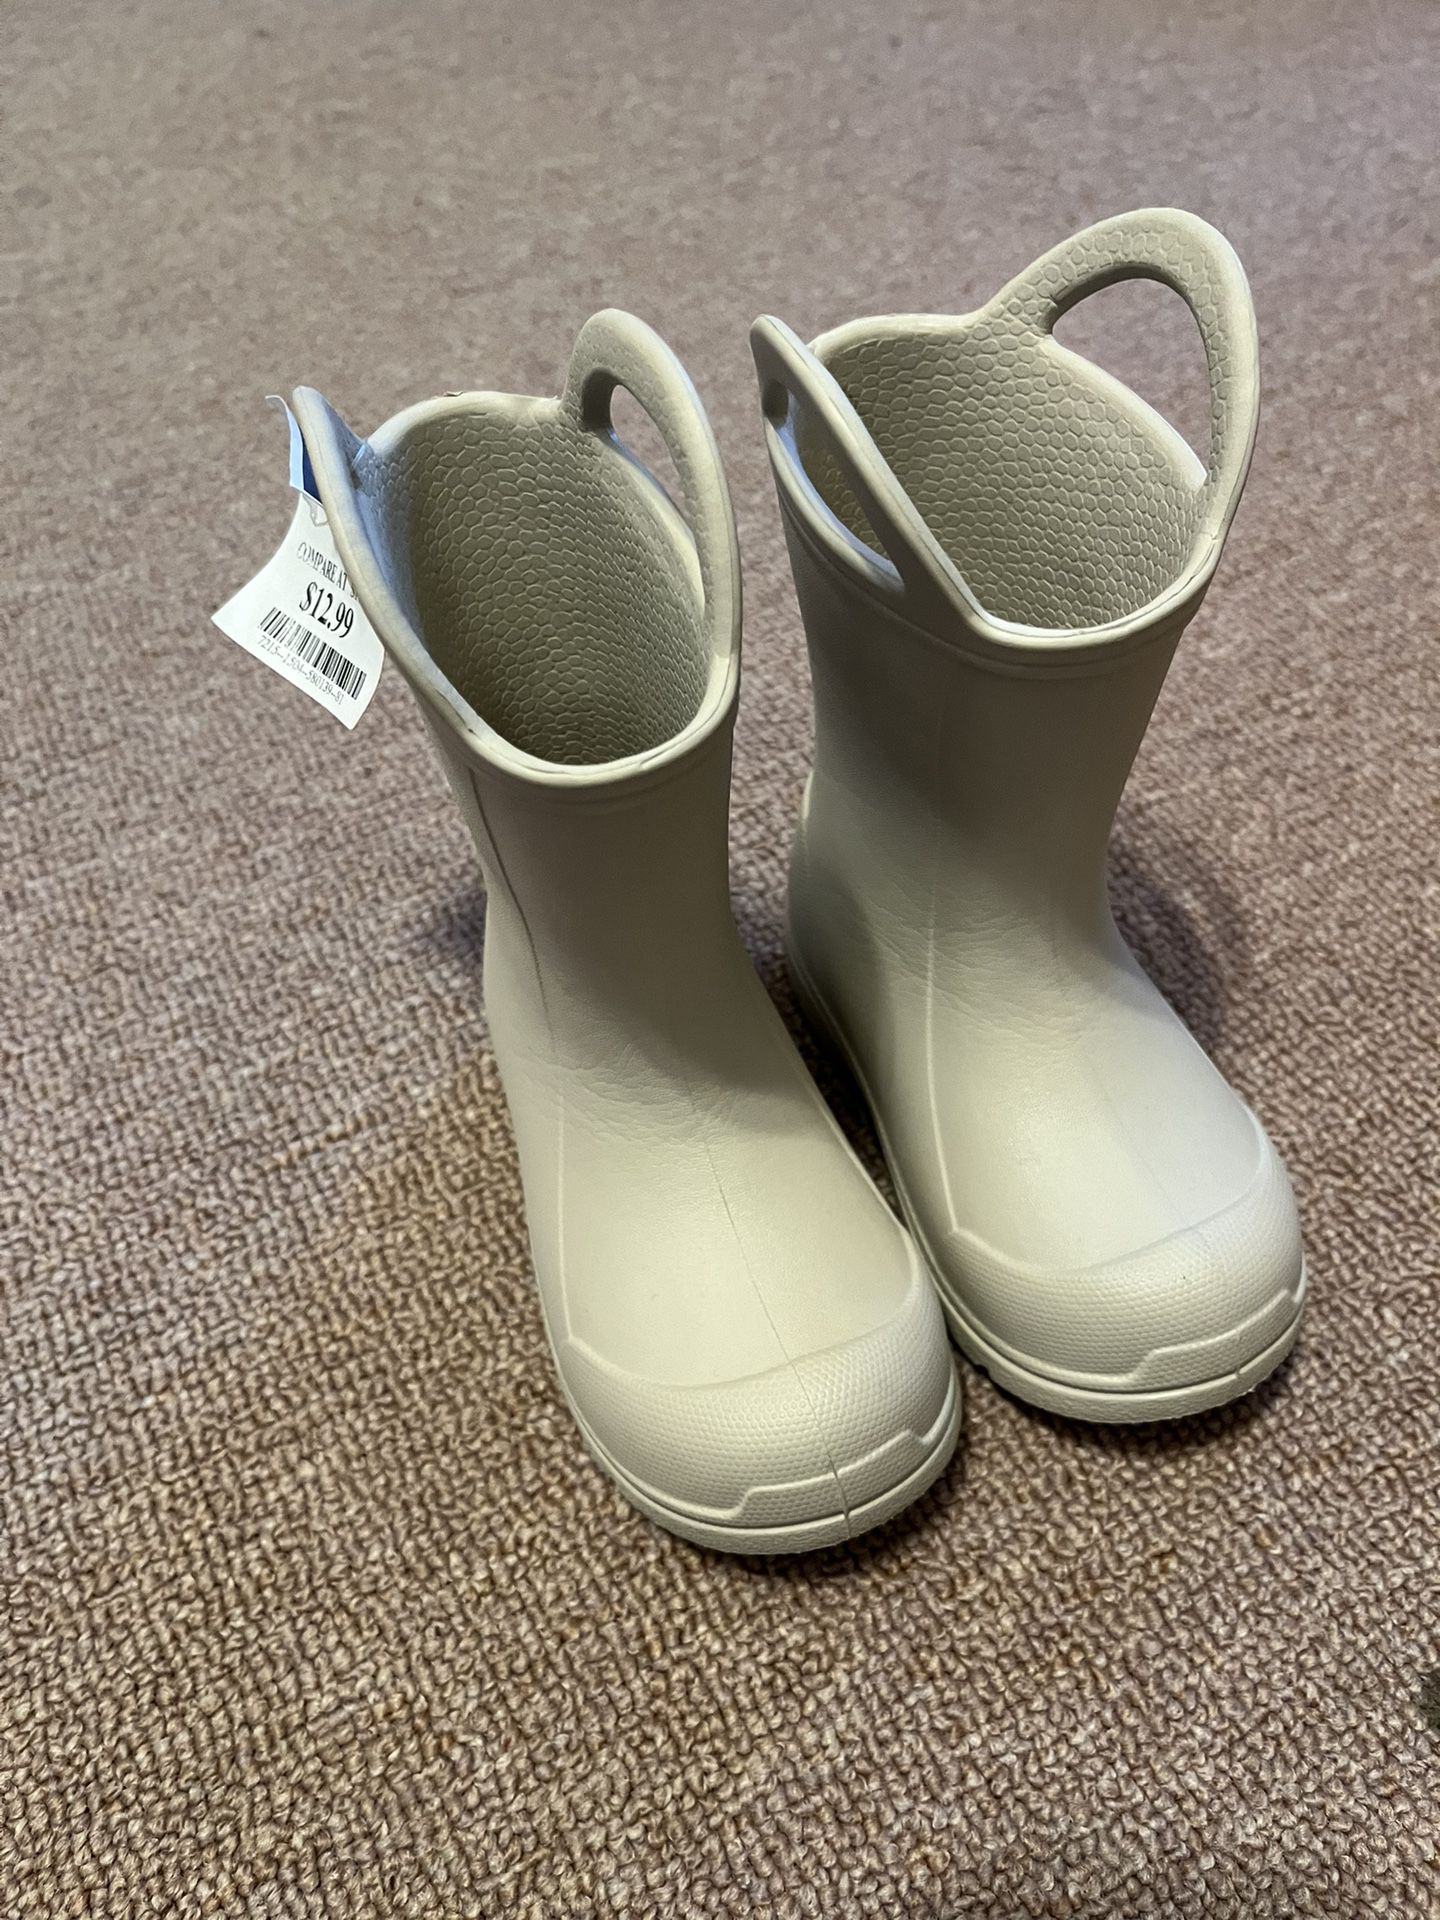 Child Rain boots Size 5 - New